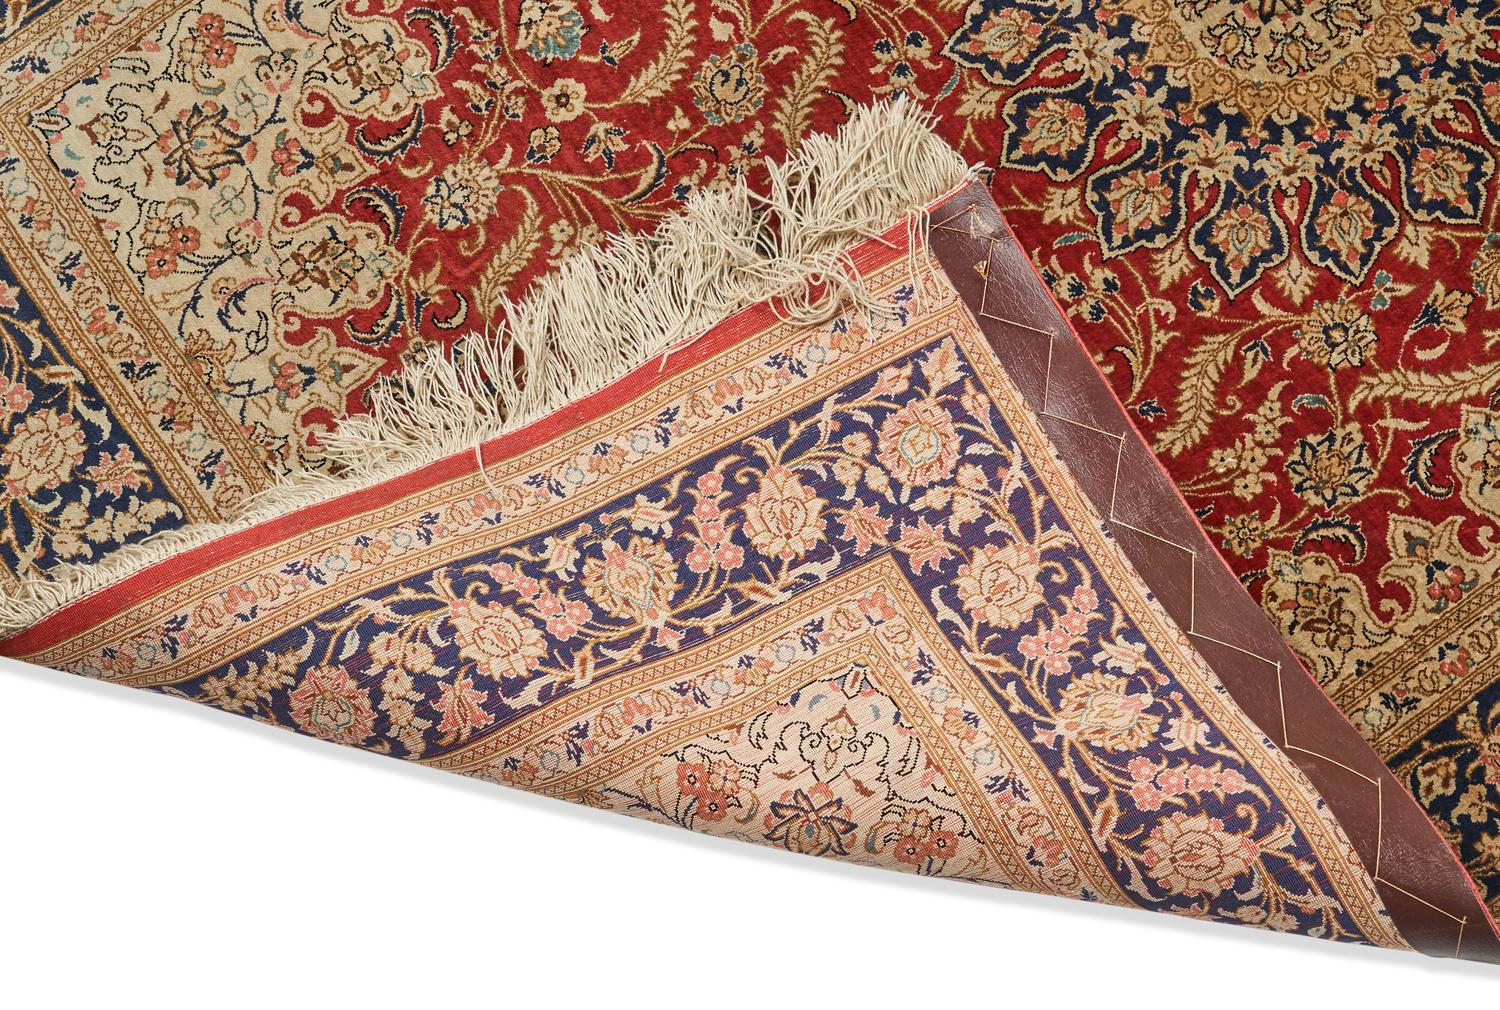 A Very Fine Iranian Kashan Silk Carpet - Price Estimate: $800 - $1500